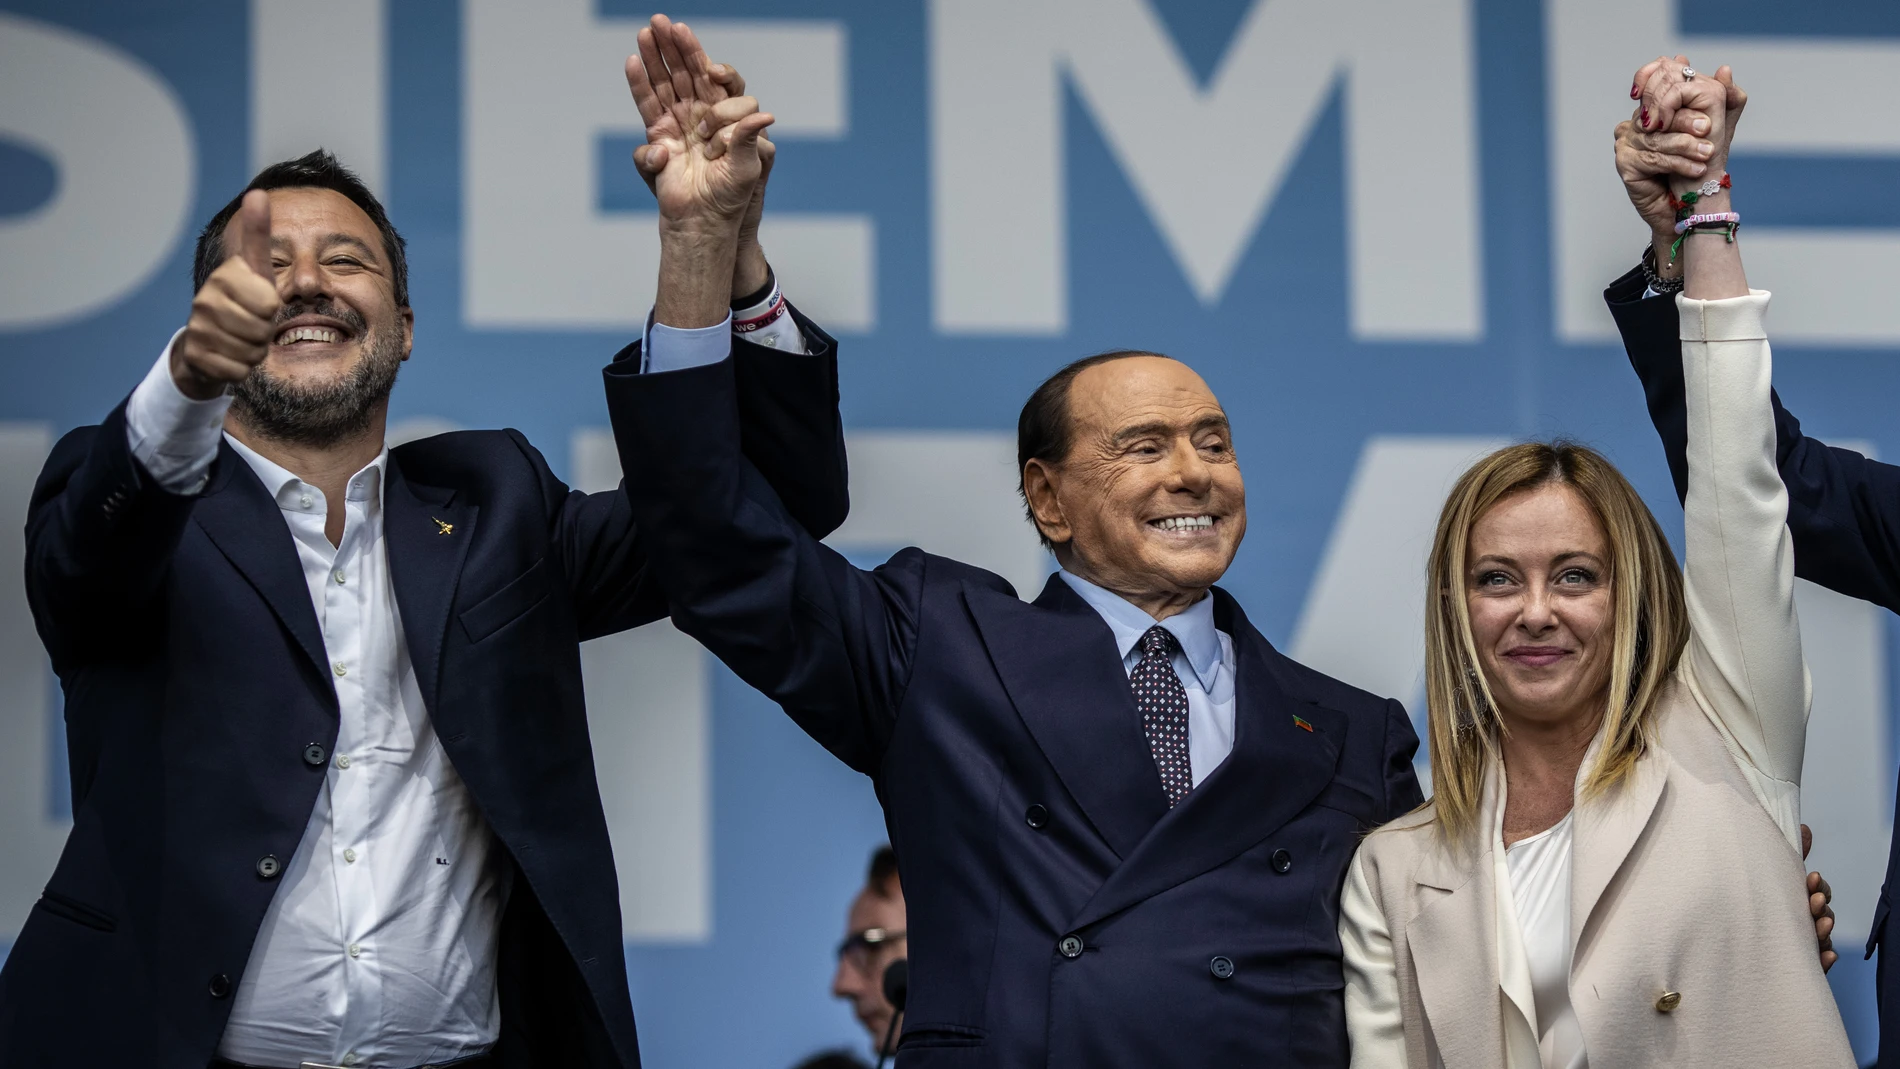  Matteo Salvini, líder de la Liga; Silvio Berlusconi, líder de Fuerza Italia; y la líder de Hermanos de Italia, Giorgia Meloni.